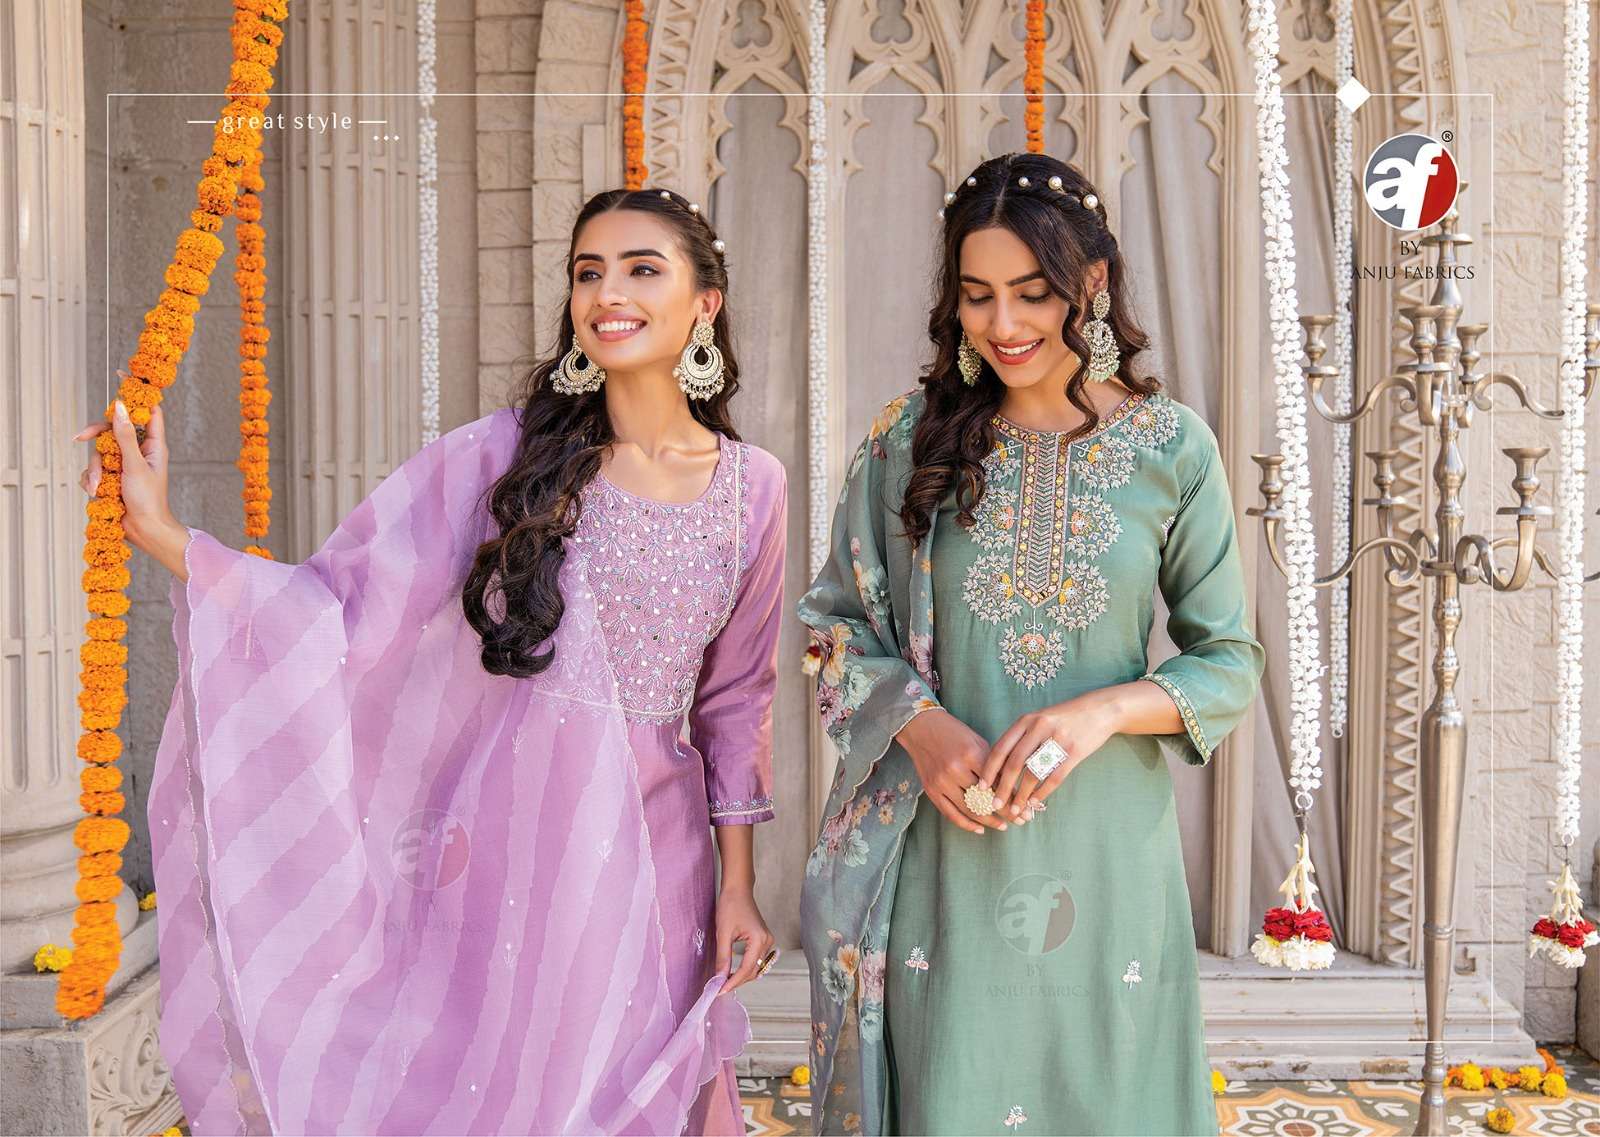 anju fabrics mayra vol-3 3251-3256 series latest designer kurti set wholesaler surat gujarat